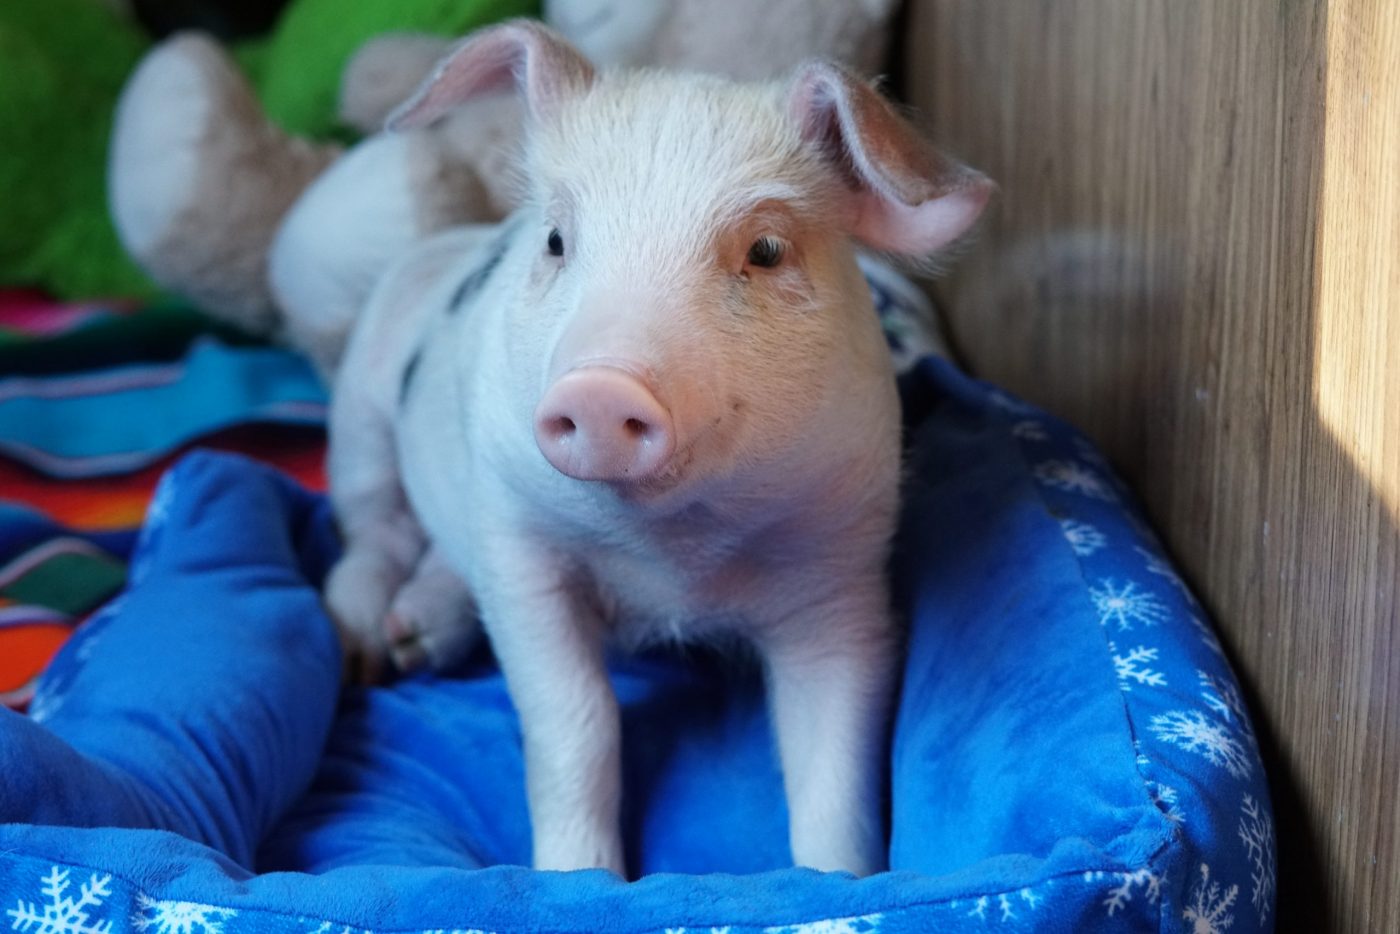 Junip Sydney as a piglet at Farm Sanctuary's Southern California shelter